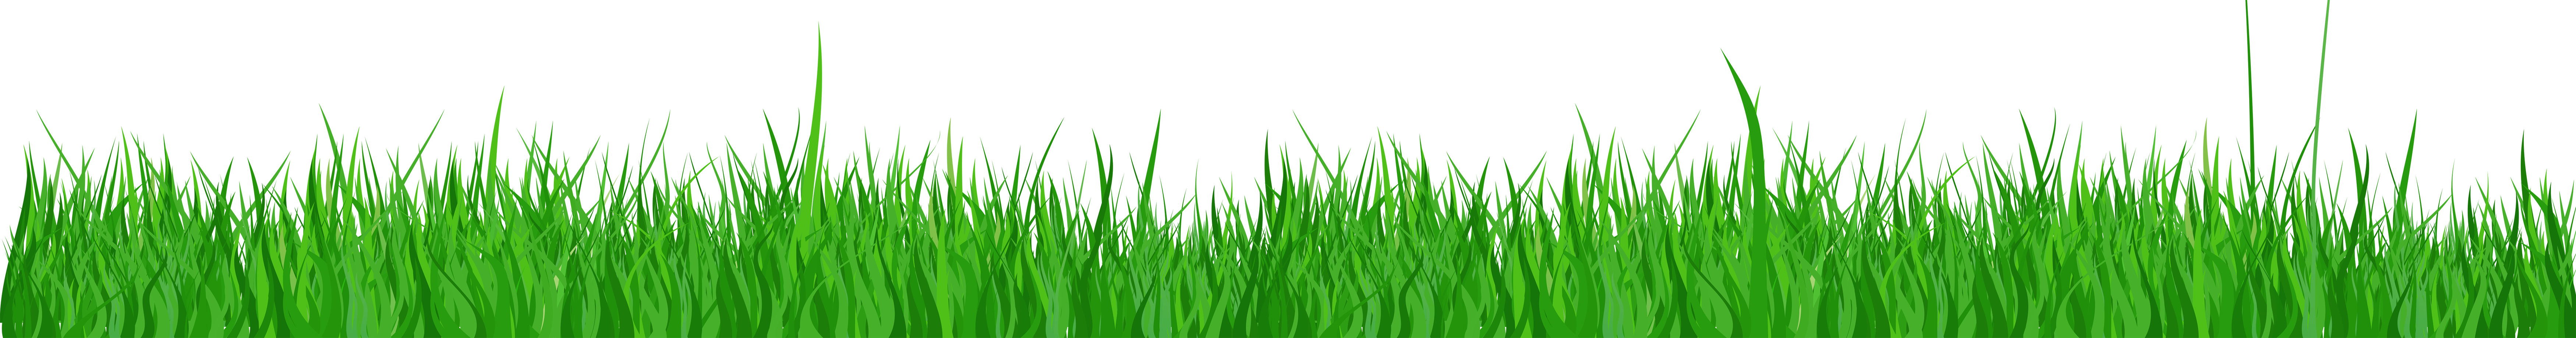 grass clipart png format